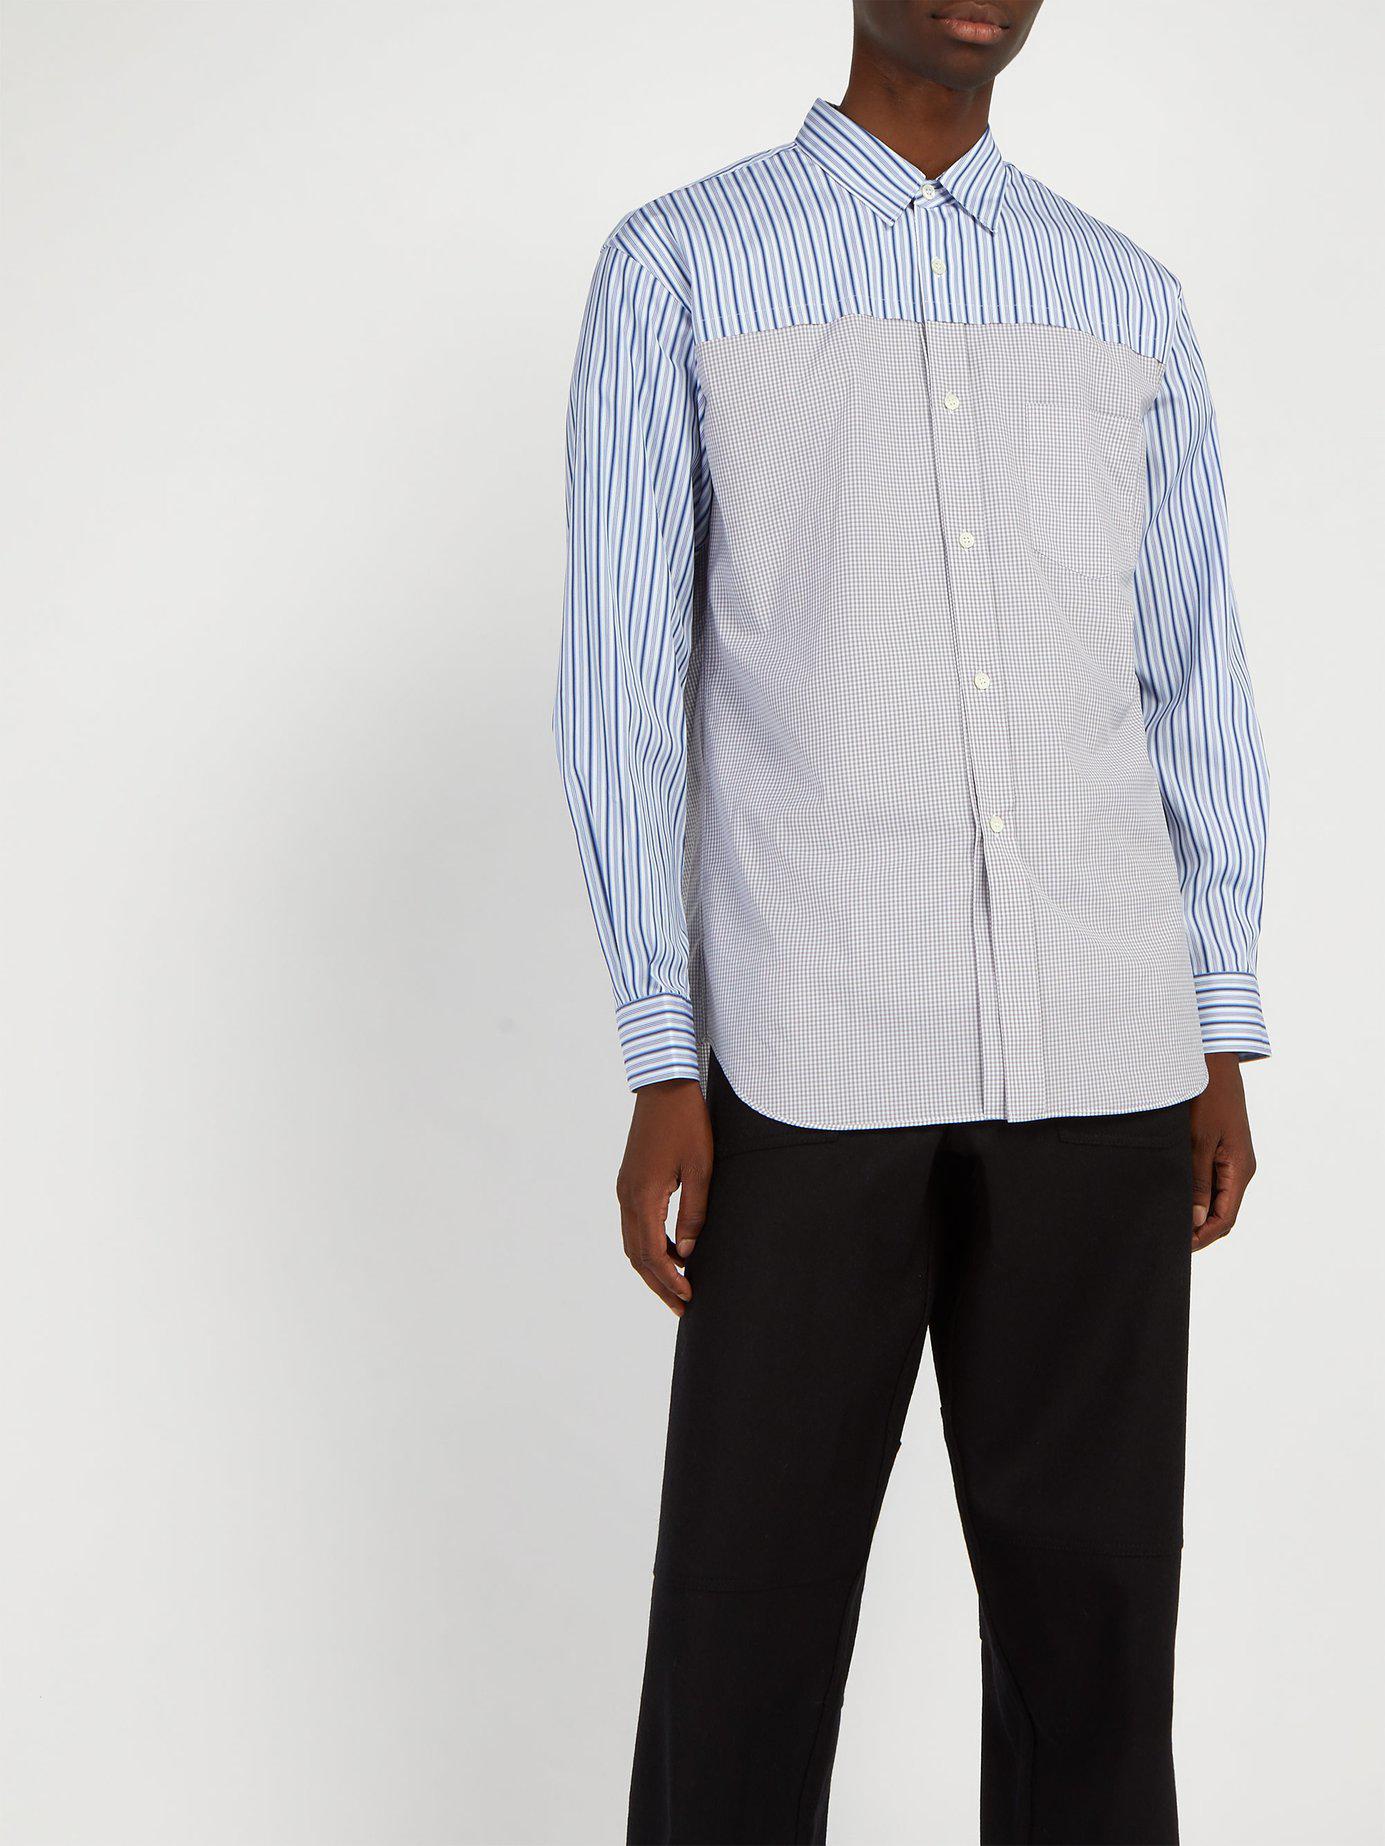 Comme des Garçons Contrast-panelled Cotton Shirt in Gray for Men - Lyst